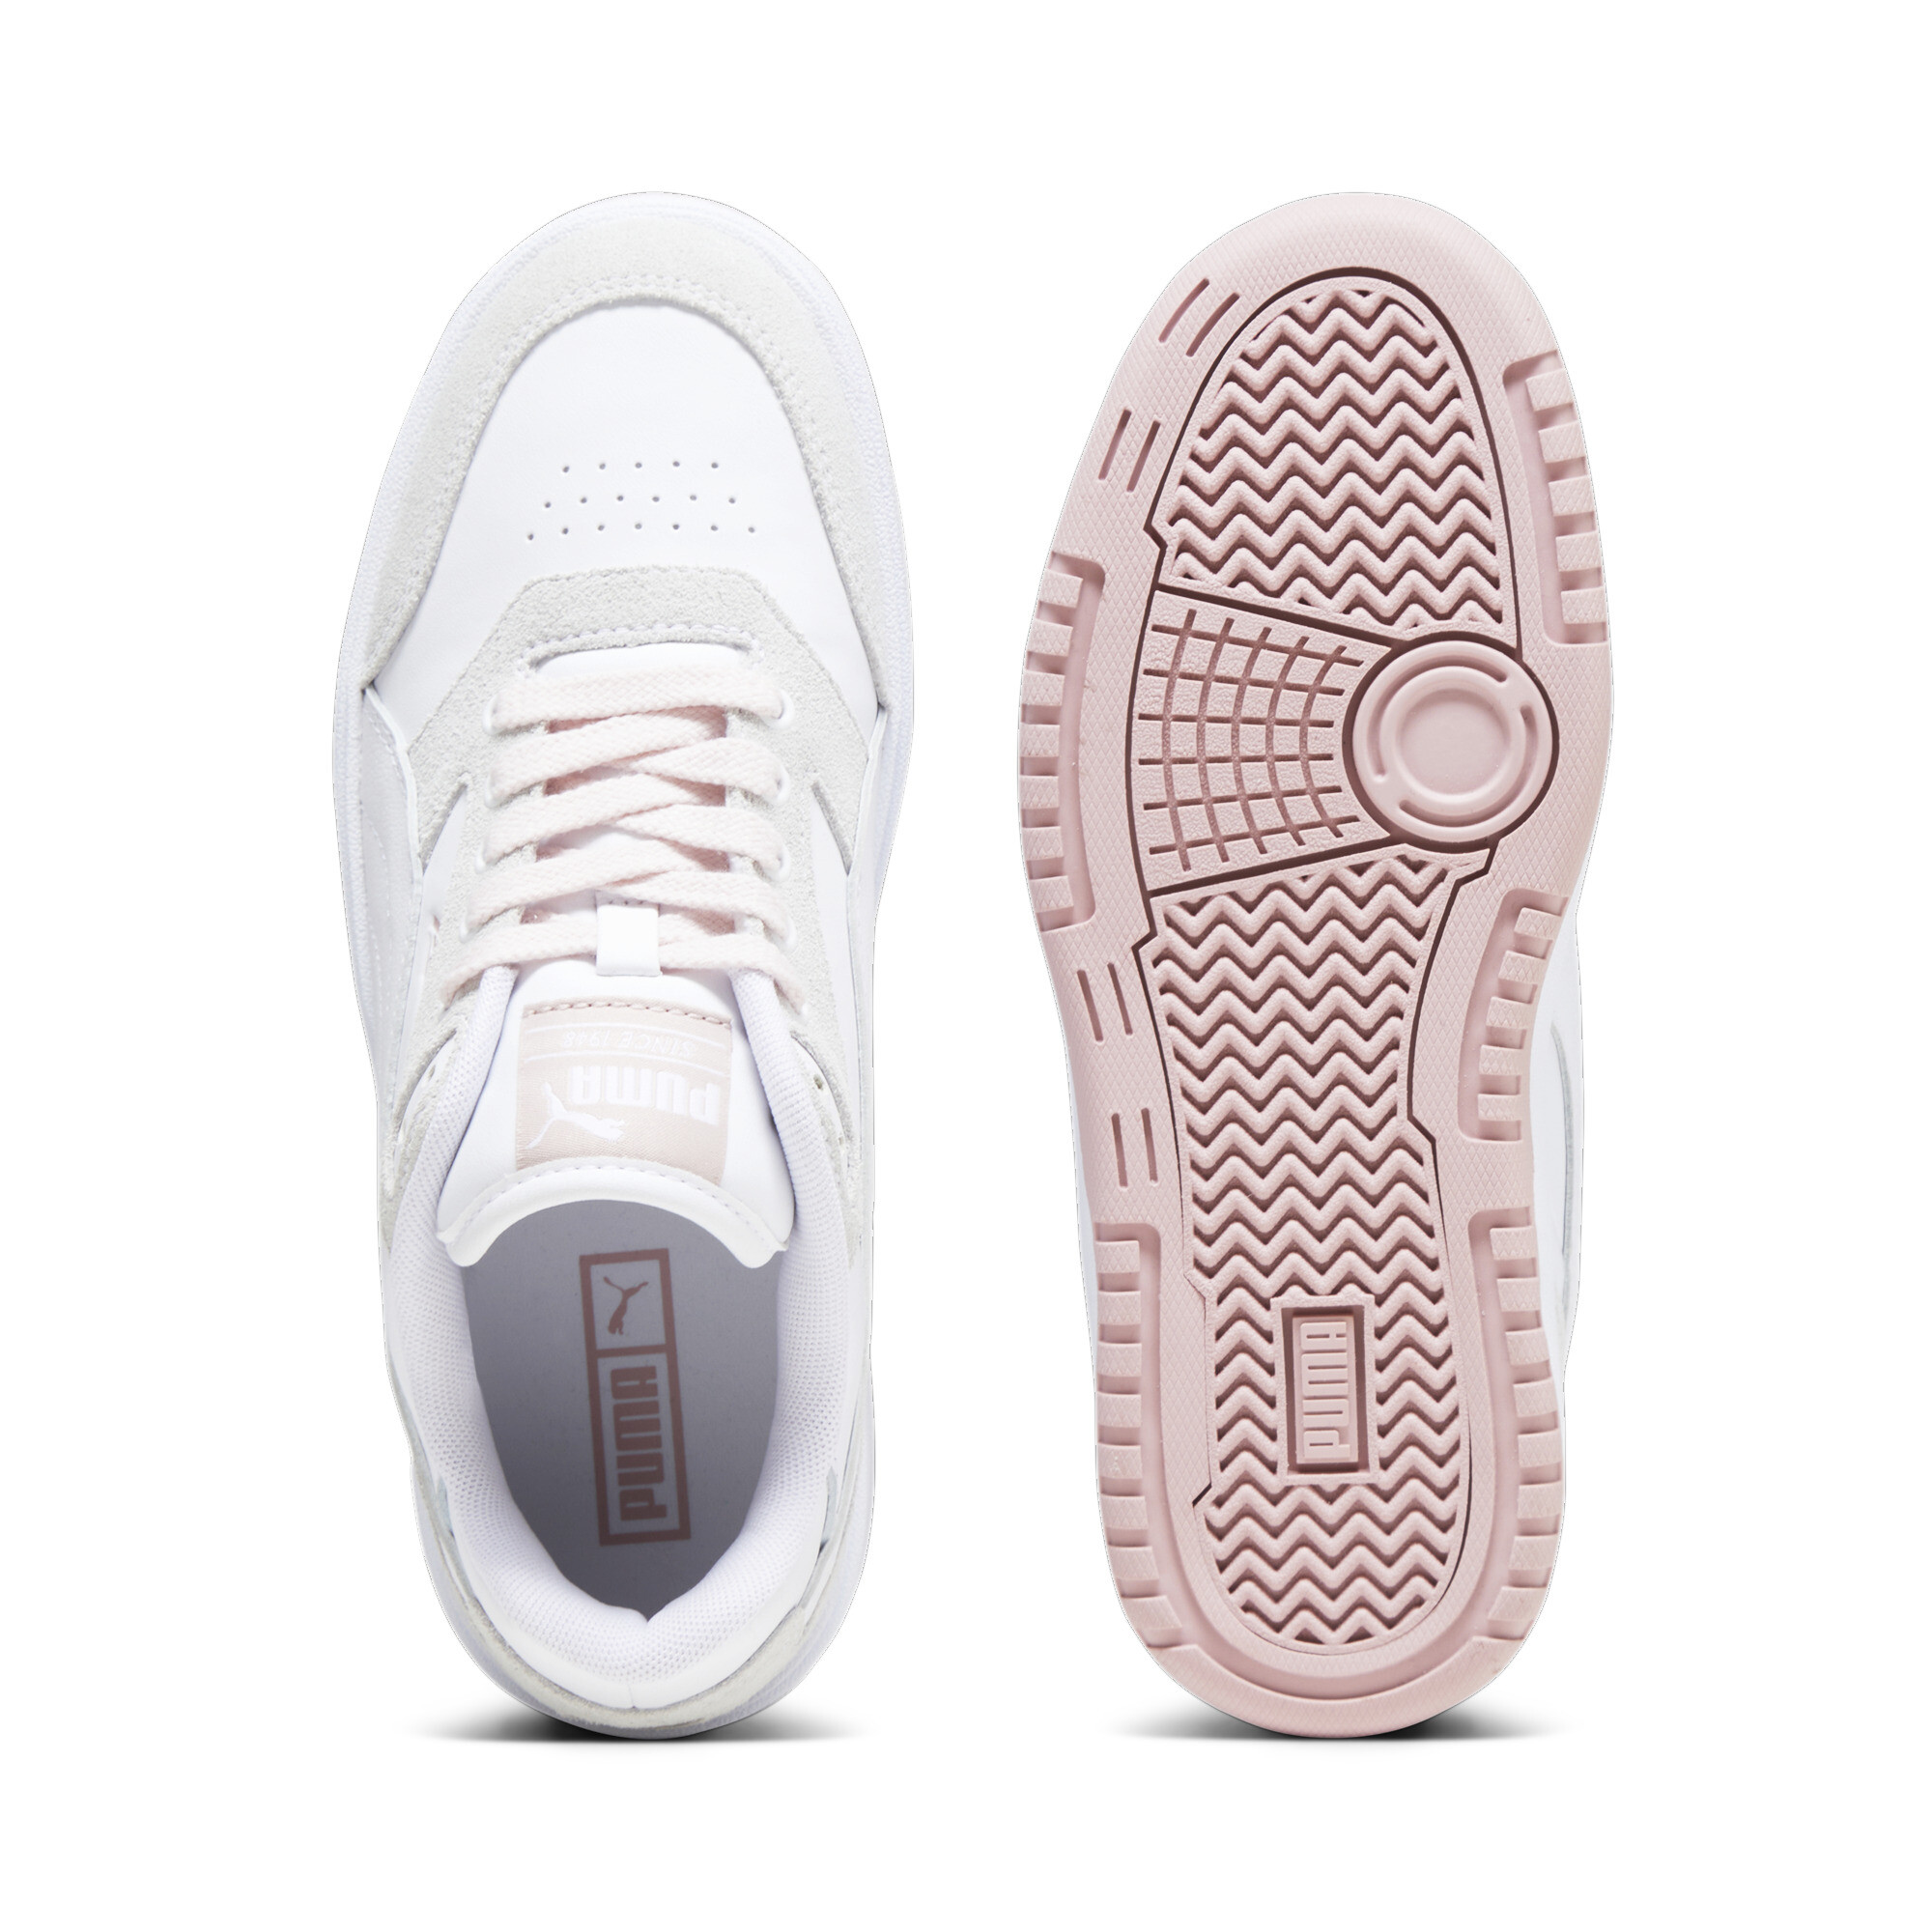 Women's Puma Doublecourt's Sneakers, White, Size 37.5, Shoes